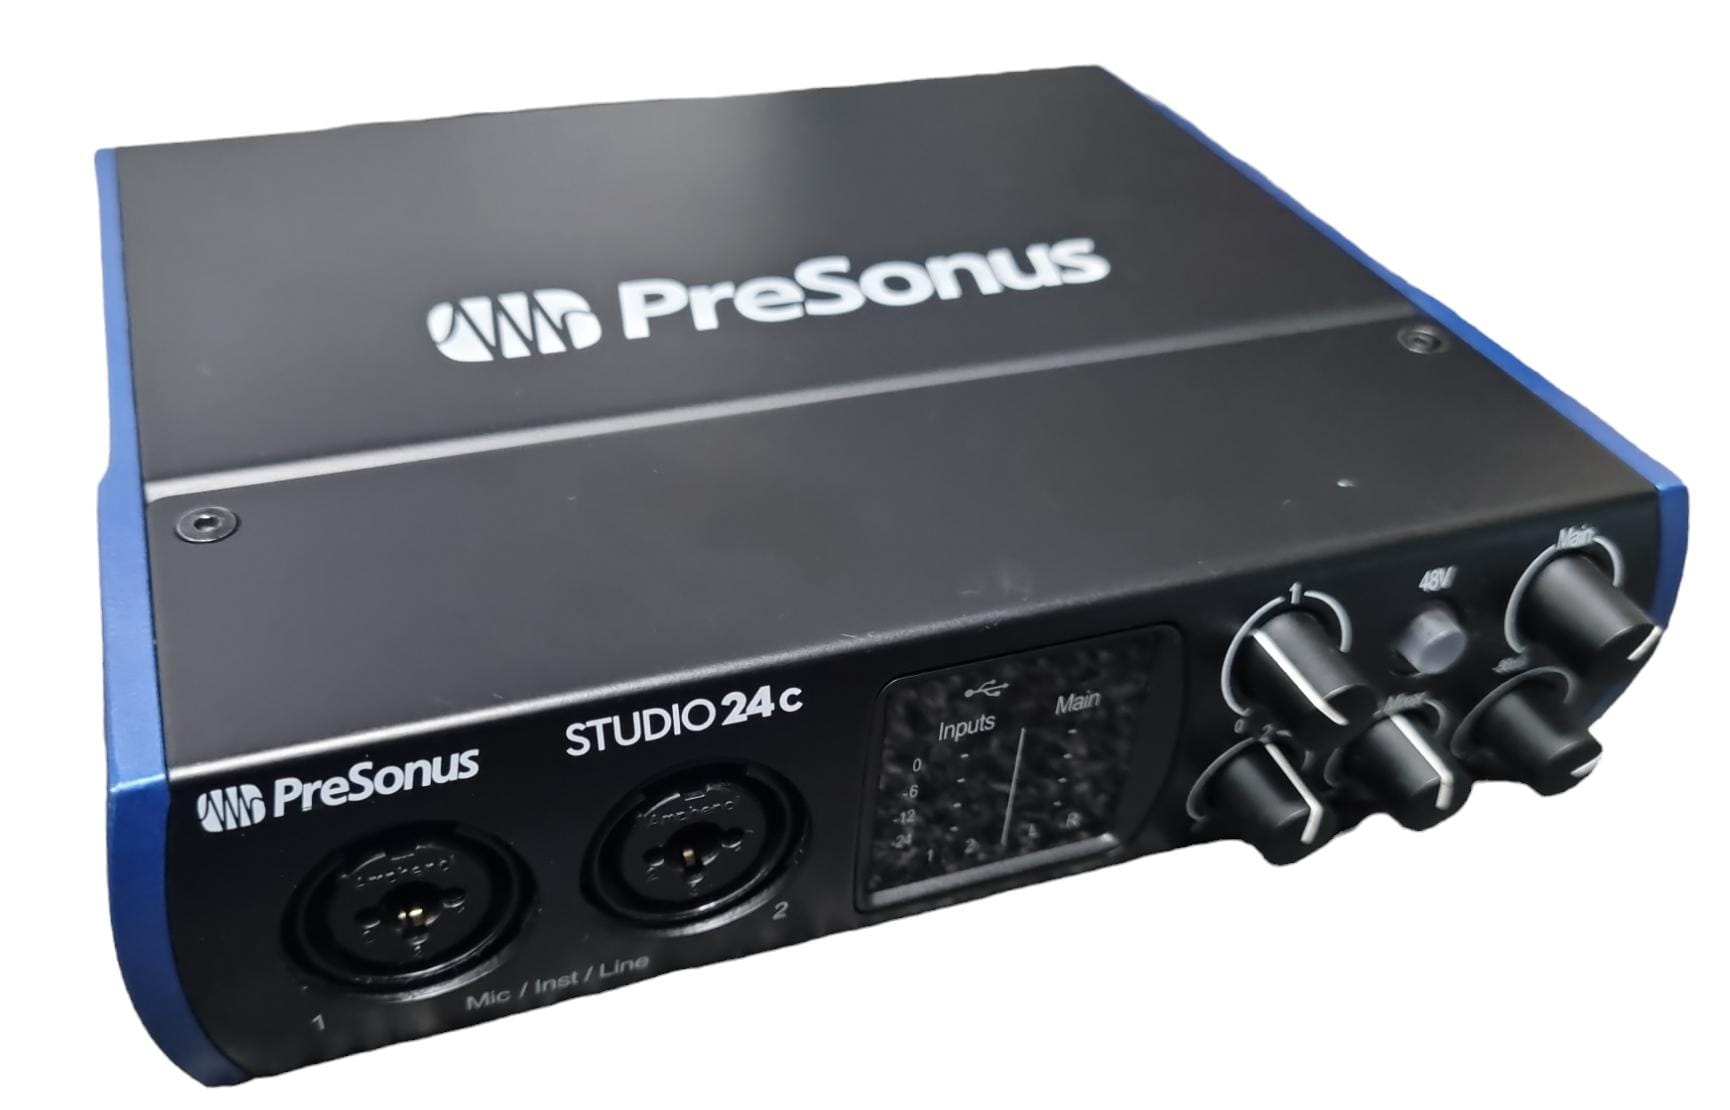 Presonus Studio 24C Audio Interface - No charger or box